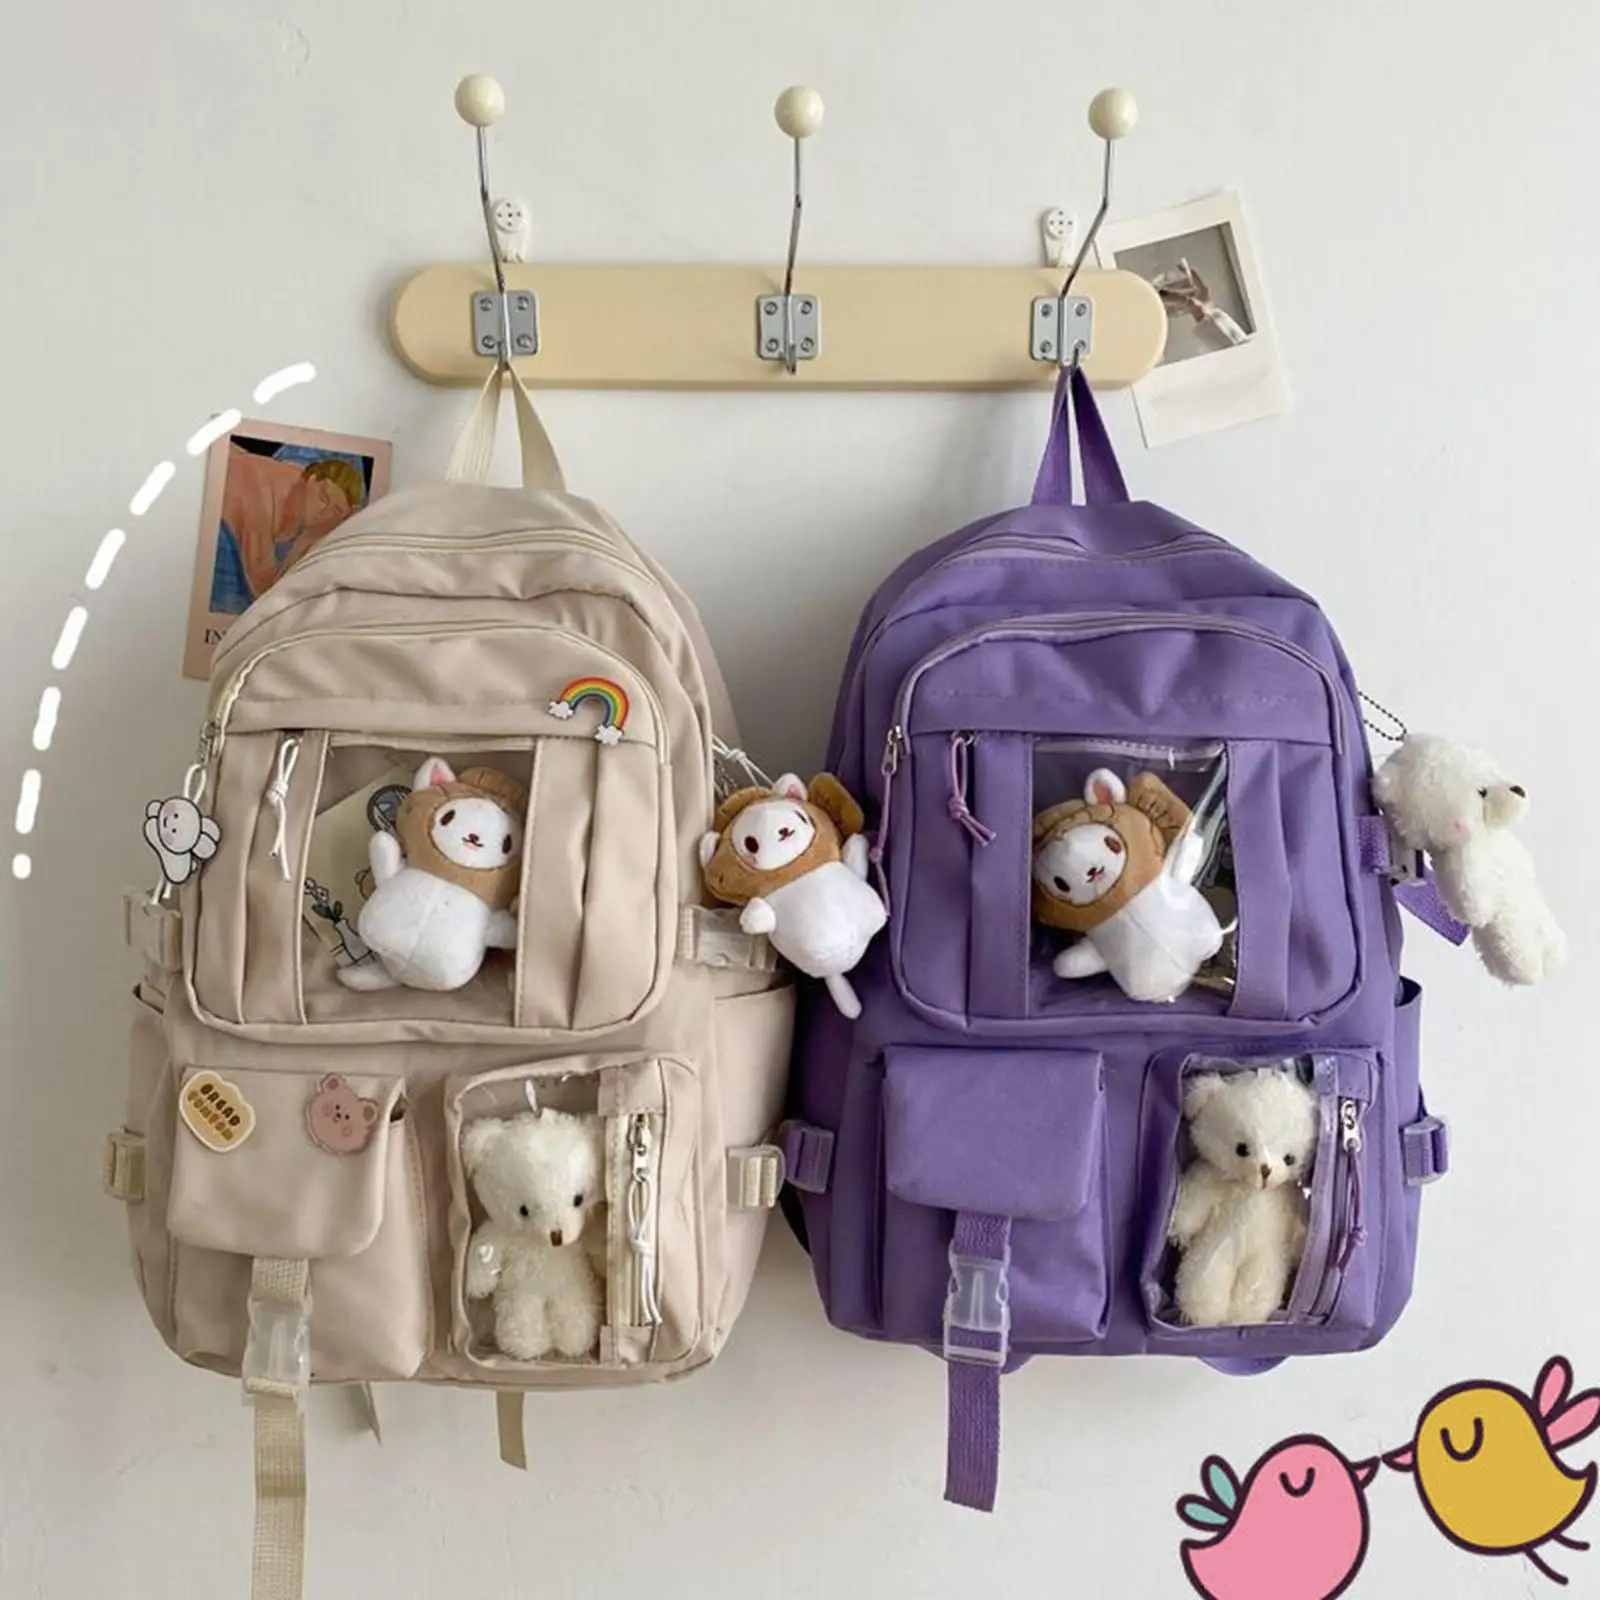 Backpack for Aesthetic Adjustable Straps School Bag Bookbag Kawaii Laptop Backpack for Teenage Girls Multi Pockets Harajuku Cute